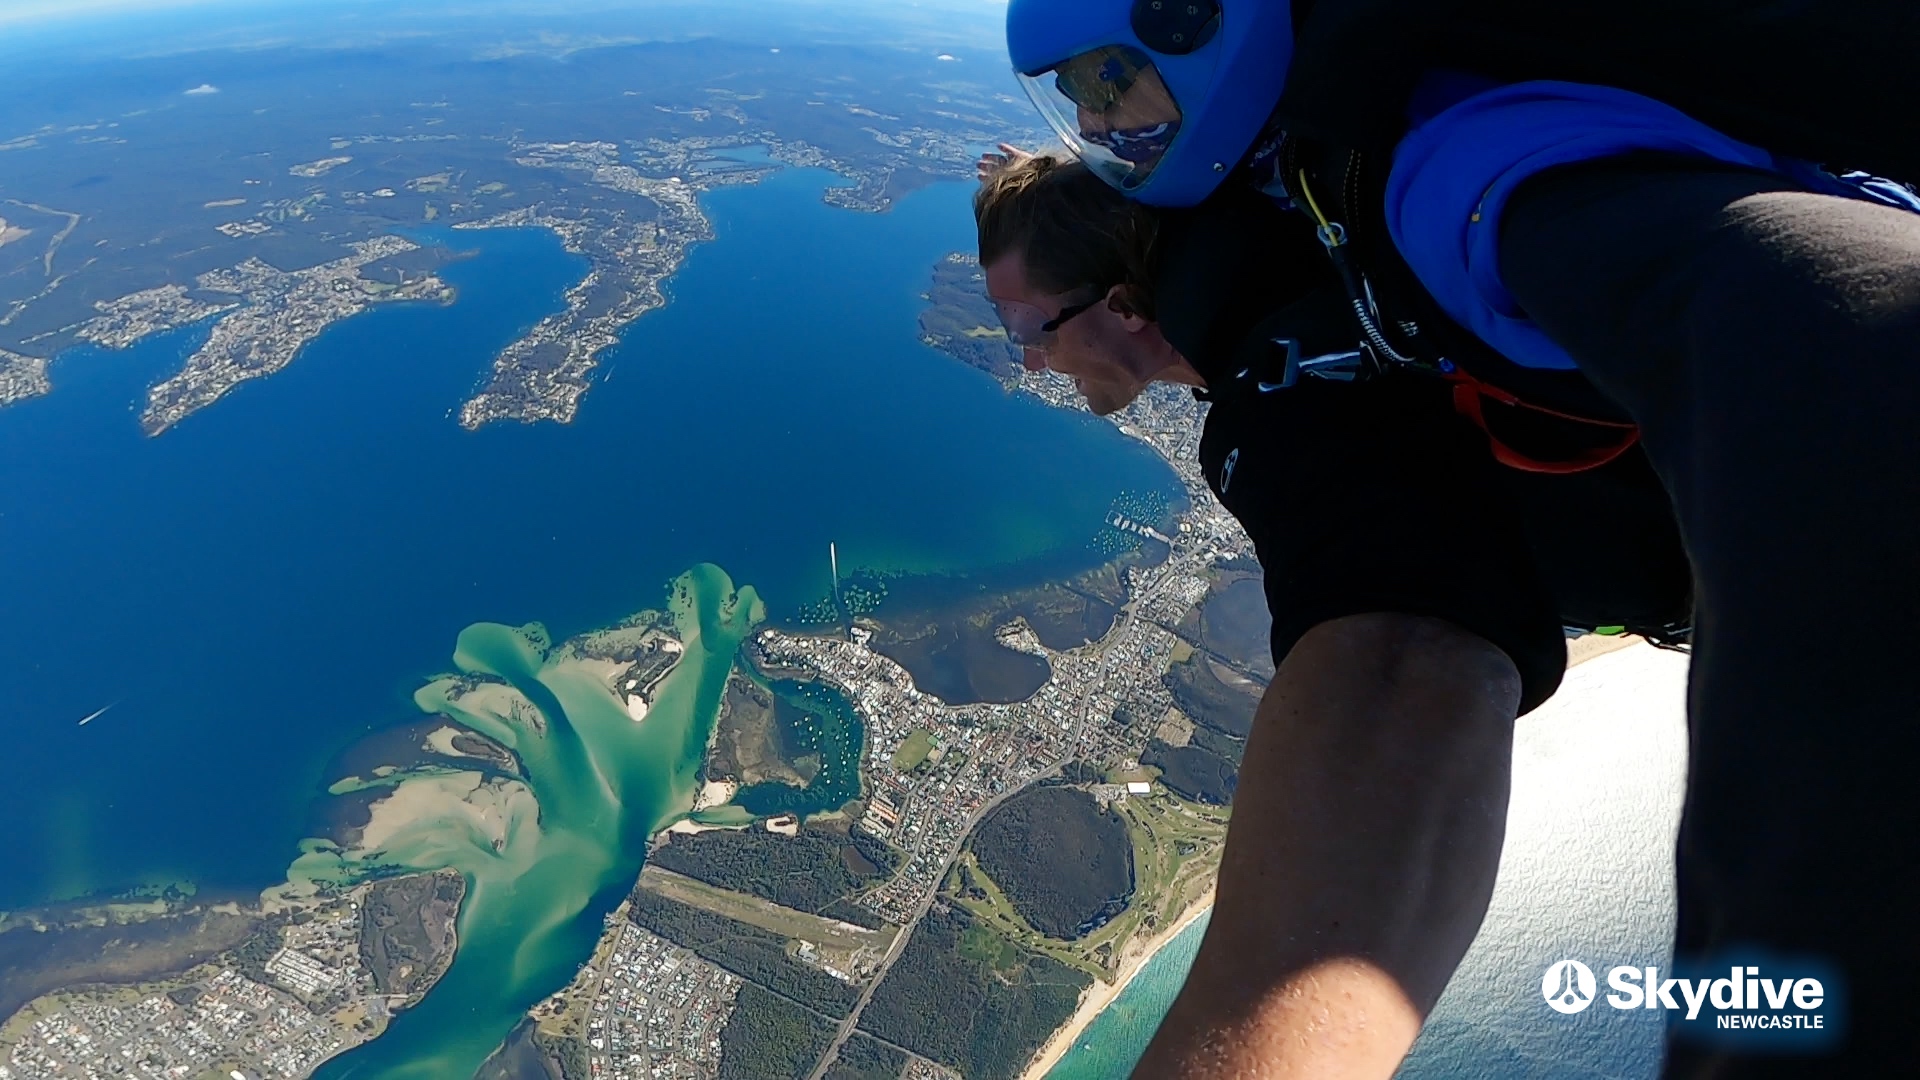 Skydive Australia Newcastle